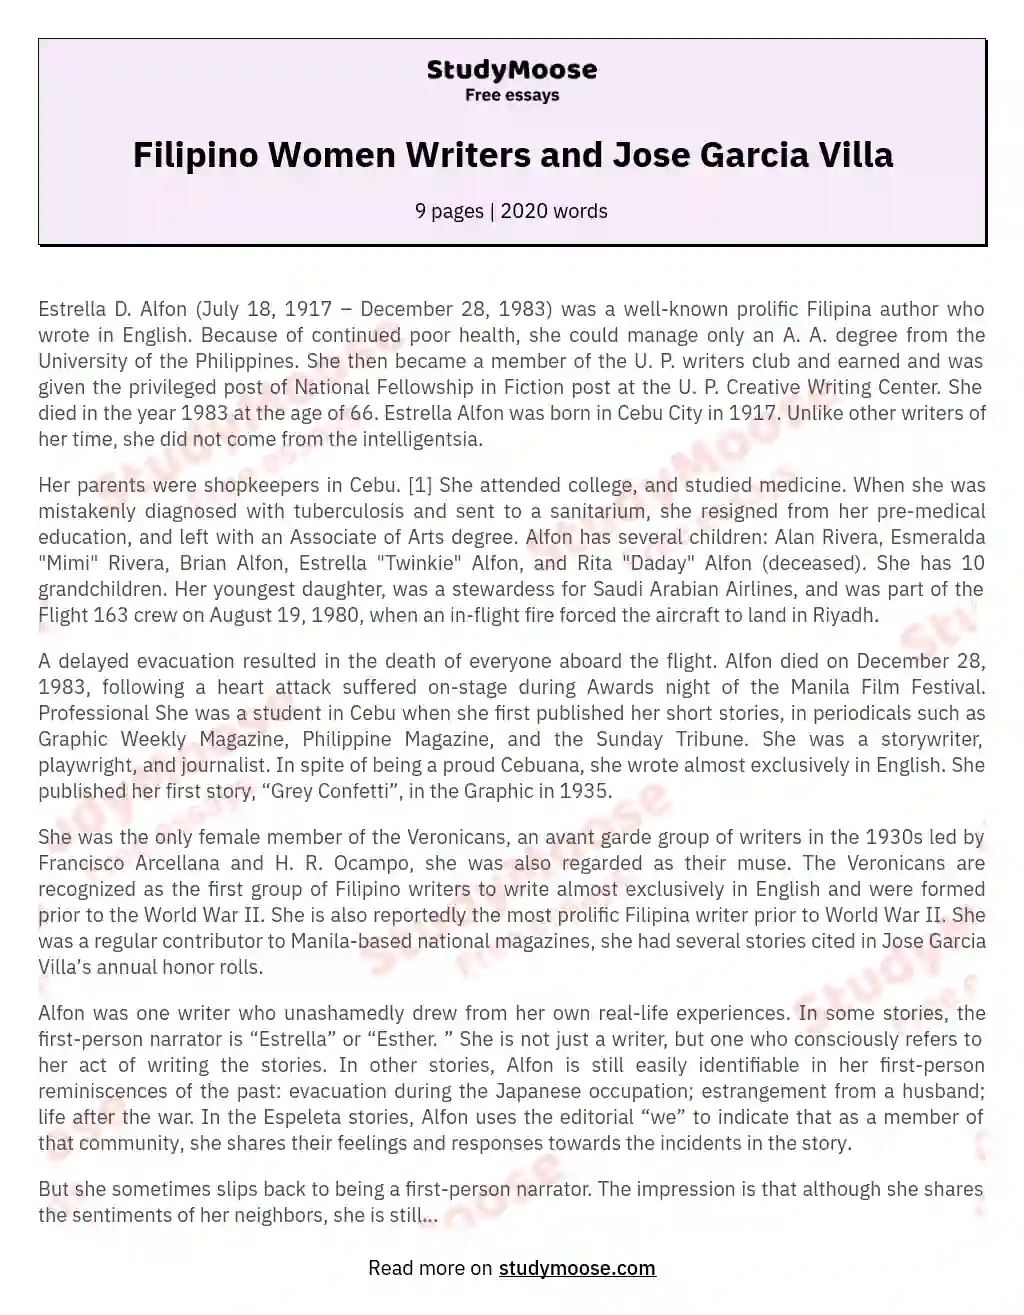 Filipino Women Writers and Jose Garcia Villa essay